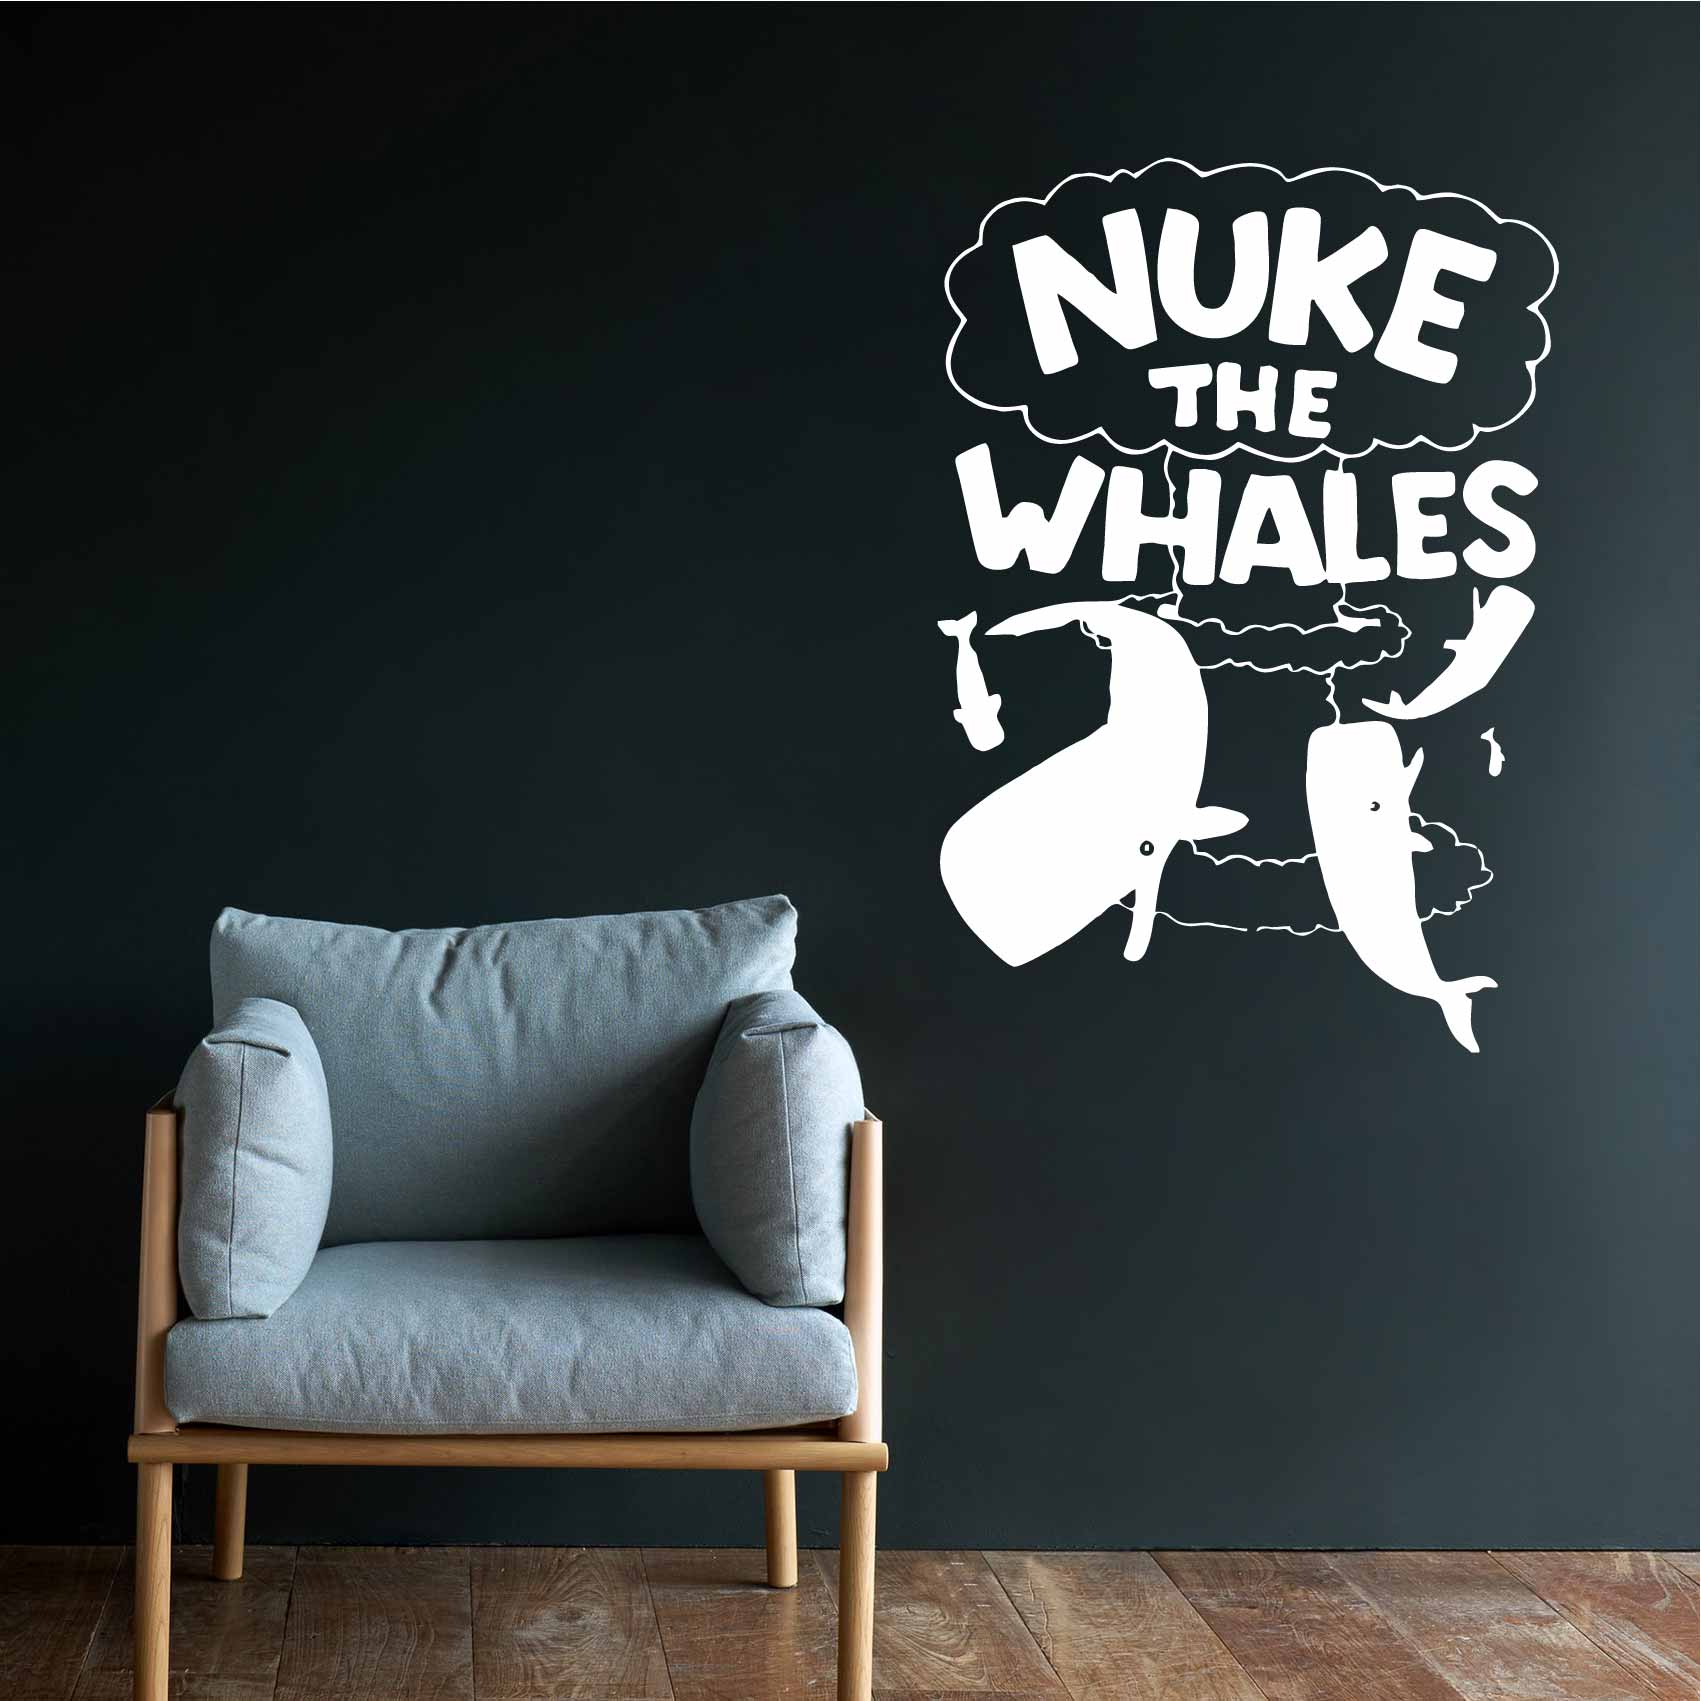 stickers-nuke-the-whales-simpsons-ref8geek-stickers-muraux-geek-autocollant-deco-salon-chambre-ado-garcon-sticker-mural-geek